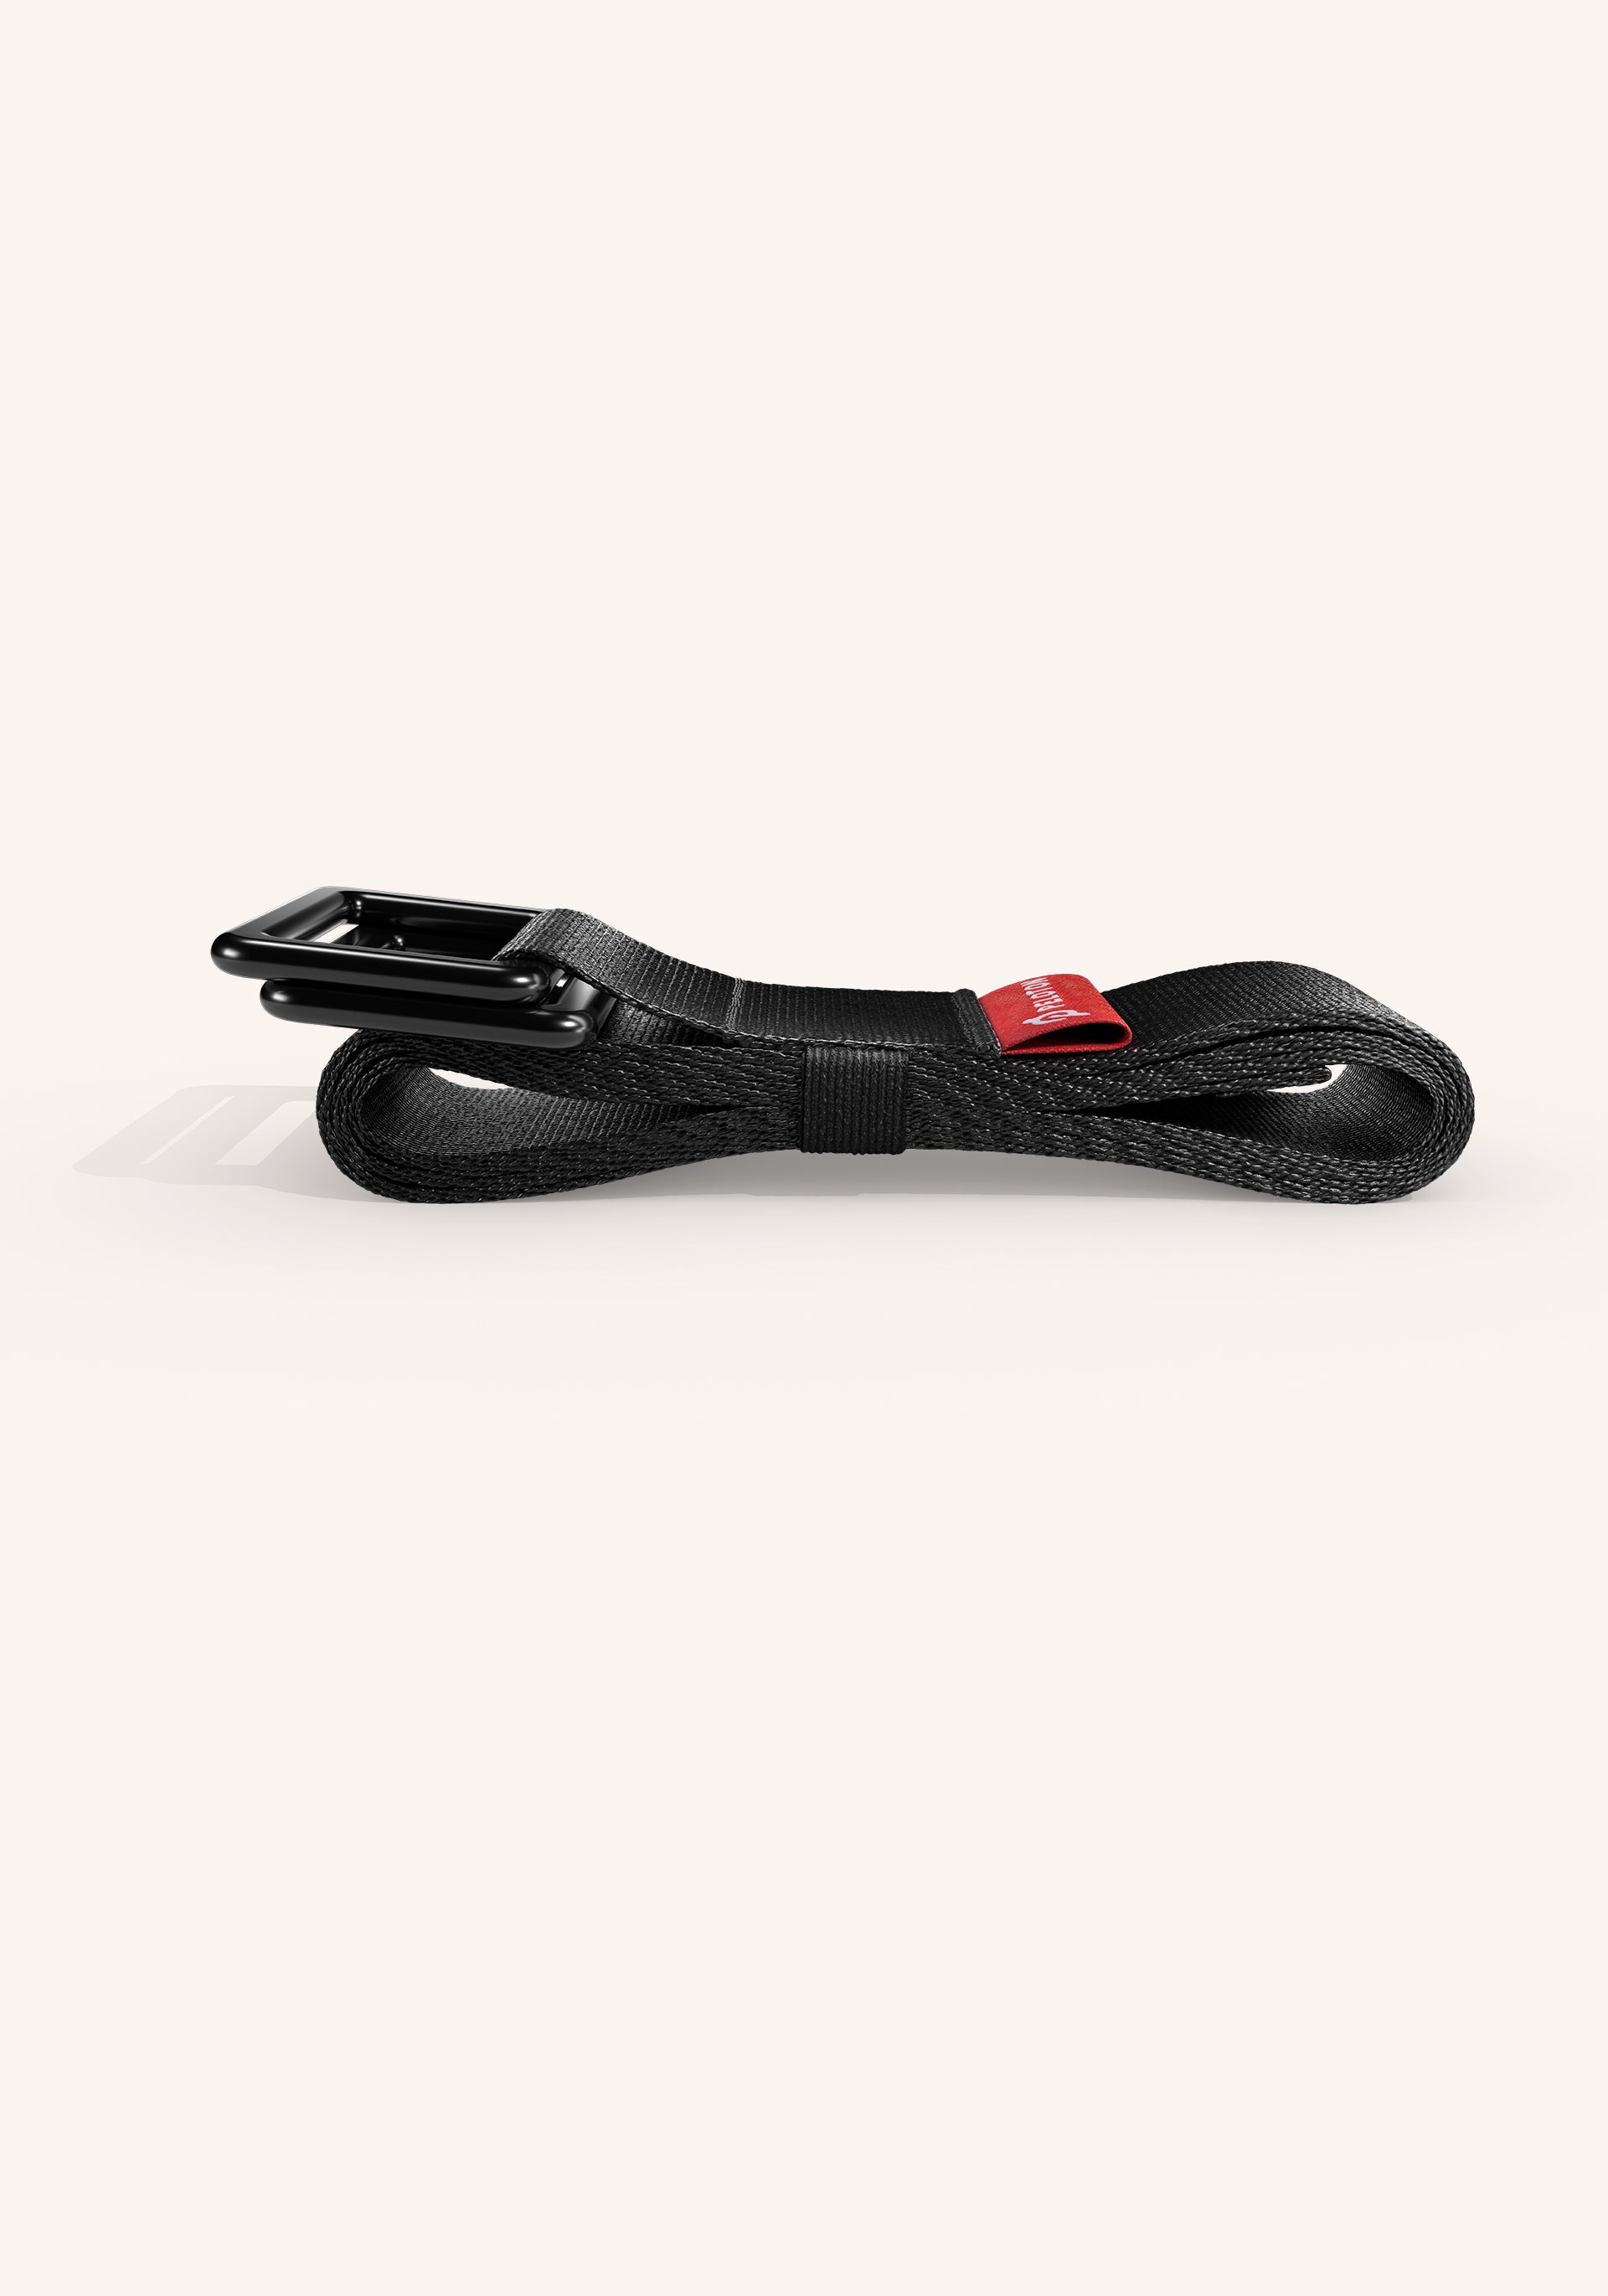  Peloton Yoga Strap 6 Ft Adjustable And Durable Nylon Strap